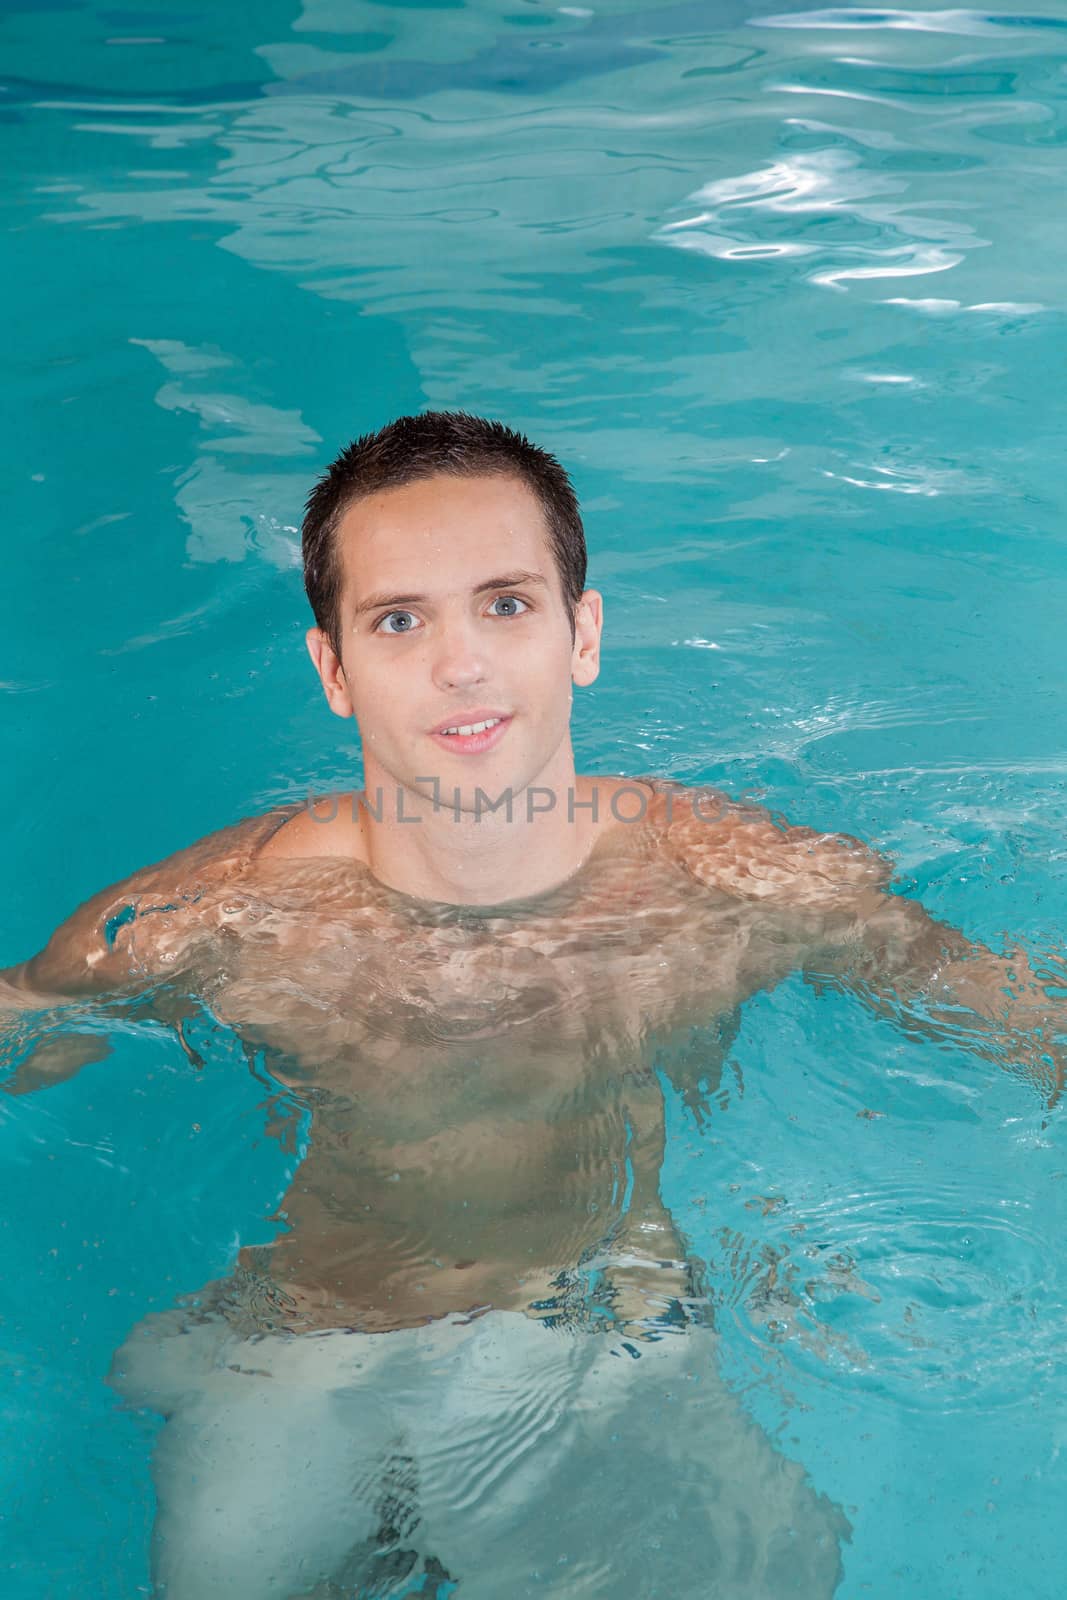 Man inside the pool